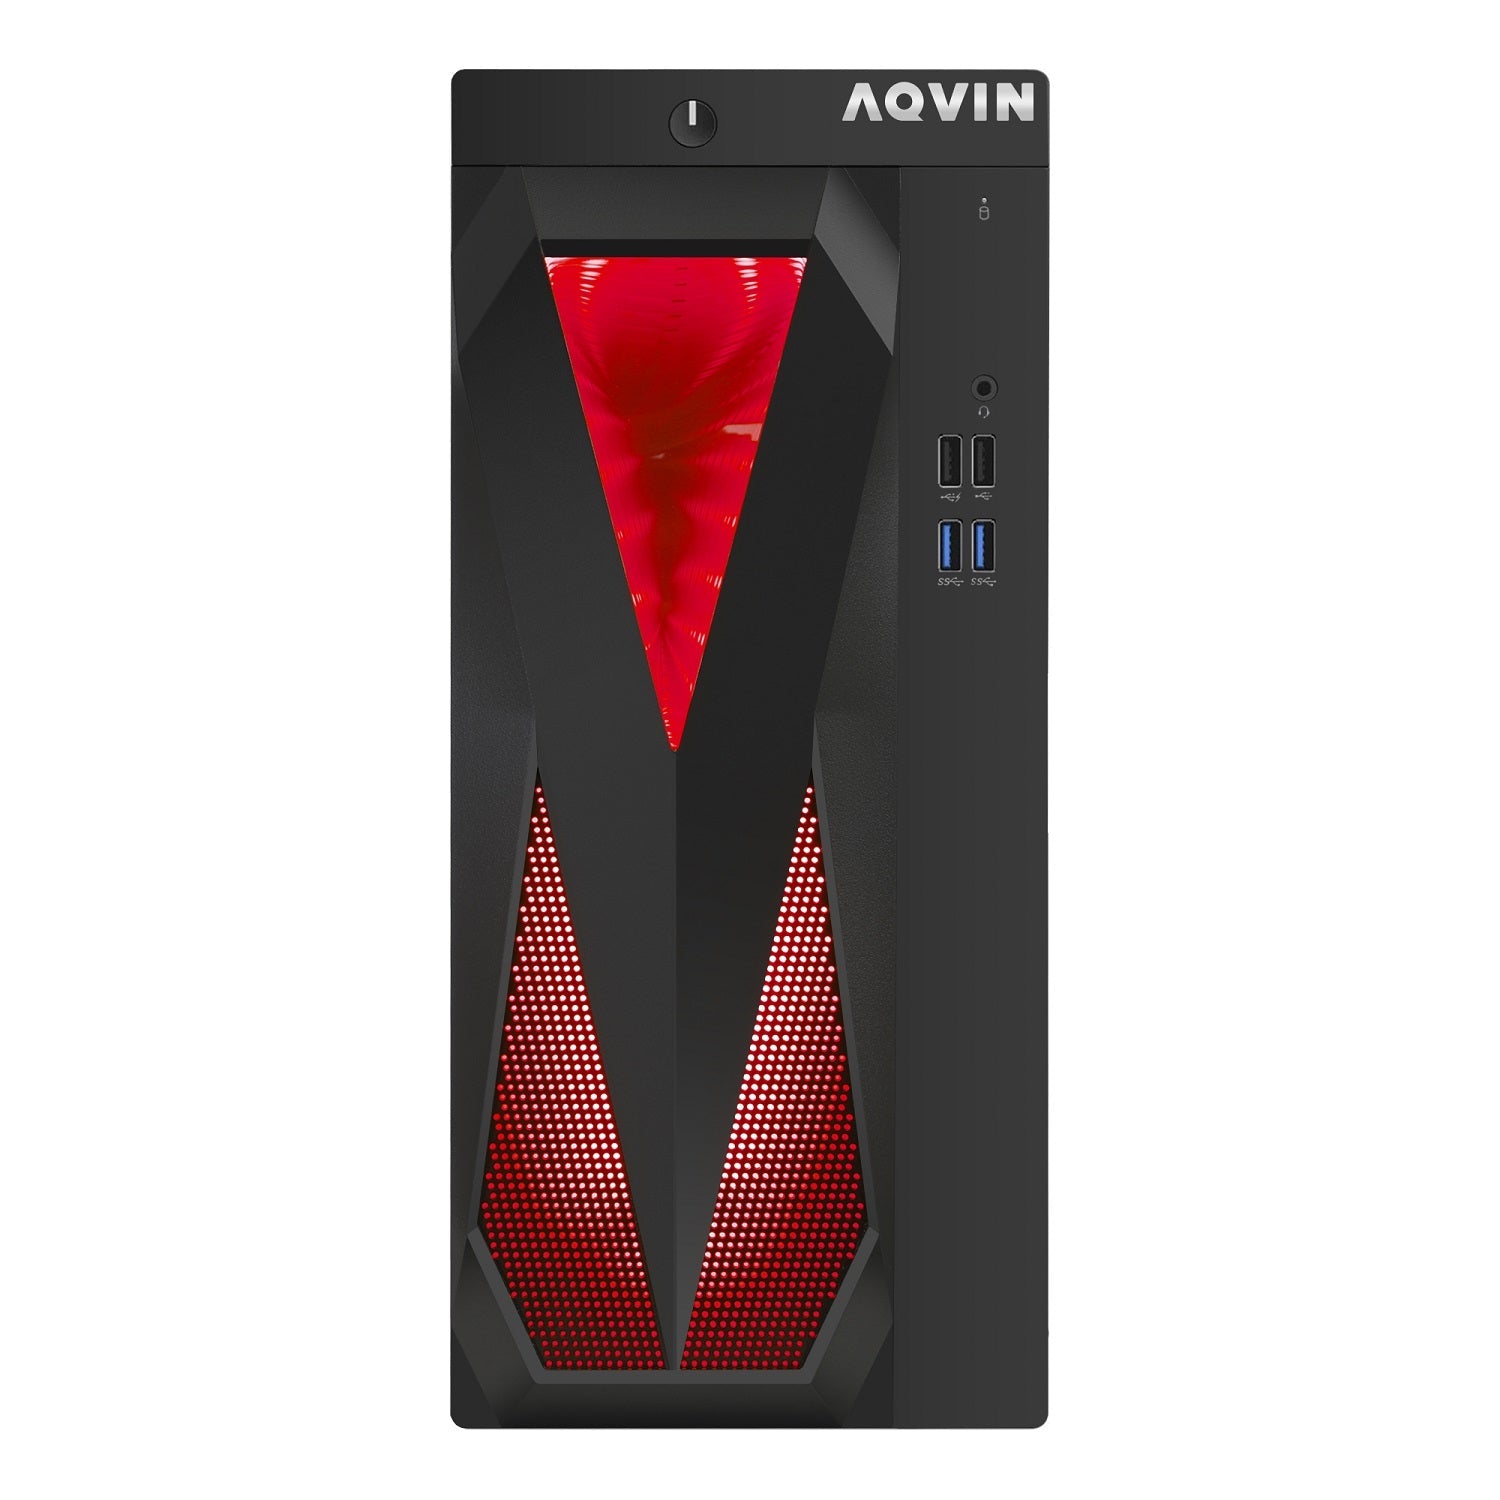 AQVIN Tower Desktop Computer Windows 11 Pro Gaming PC, 27-inch Curved Gaming Monitor, Intel Core i5 - i7 8th Gen CPU,  32GB DDR4 RAM, 1TB SSD, RX 550/GTX1630/1050Ti/1650 HDMI, WIFI - Refurbished